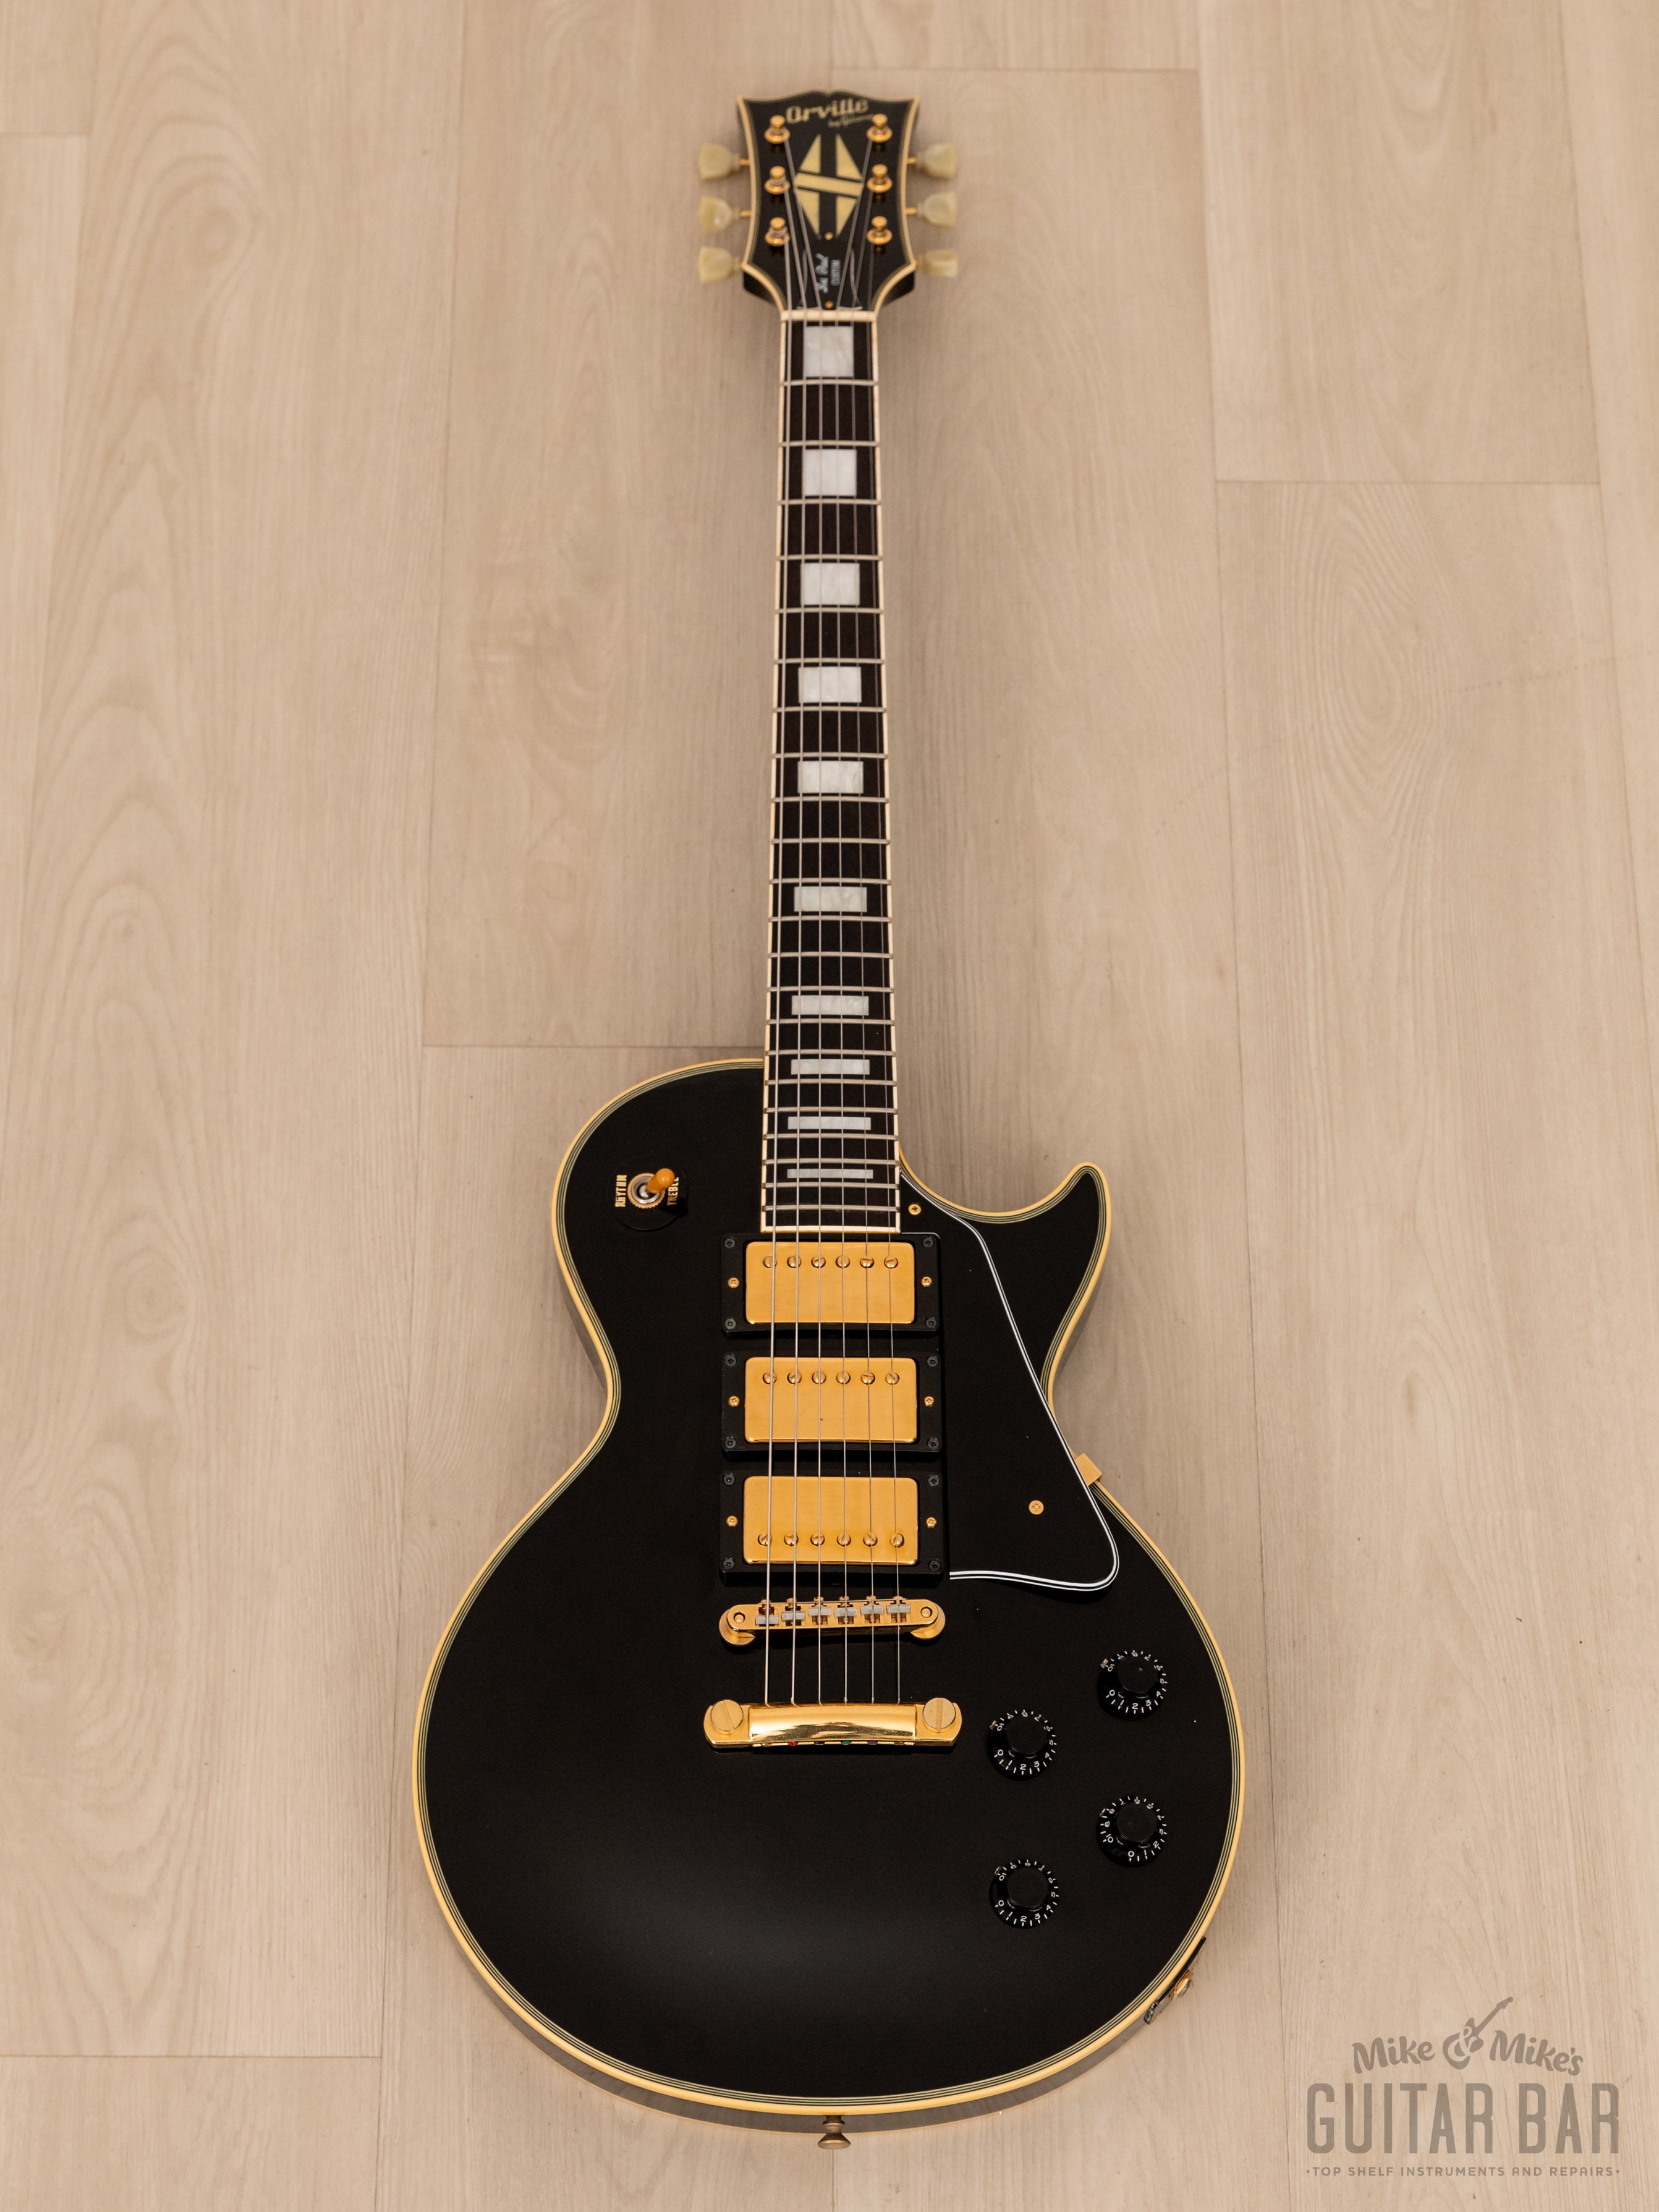 1990 Orville by Gibson Les Paul Custom 3 Pickup Black Beauty LPC-W/3PU Vintage Guitar w/ Hangtag, Japan